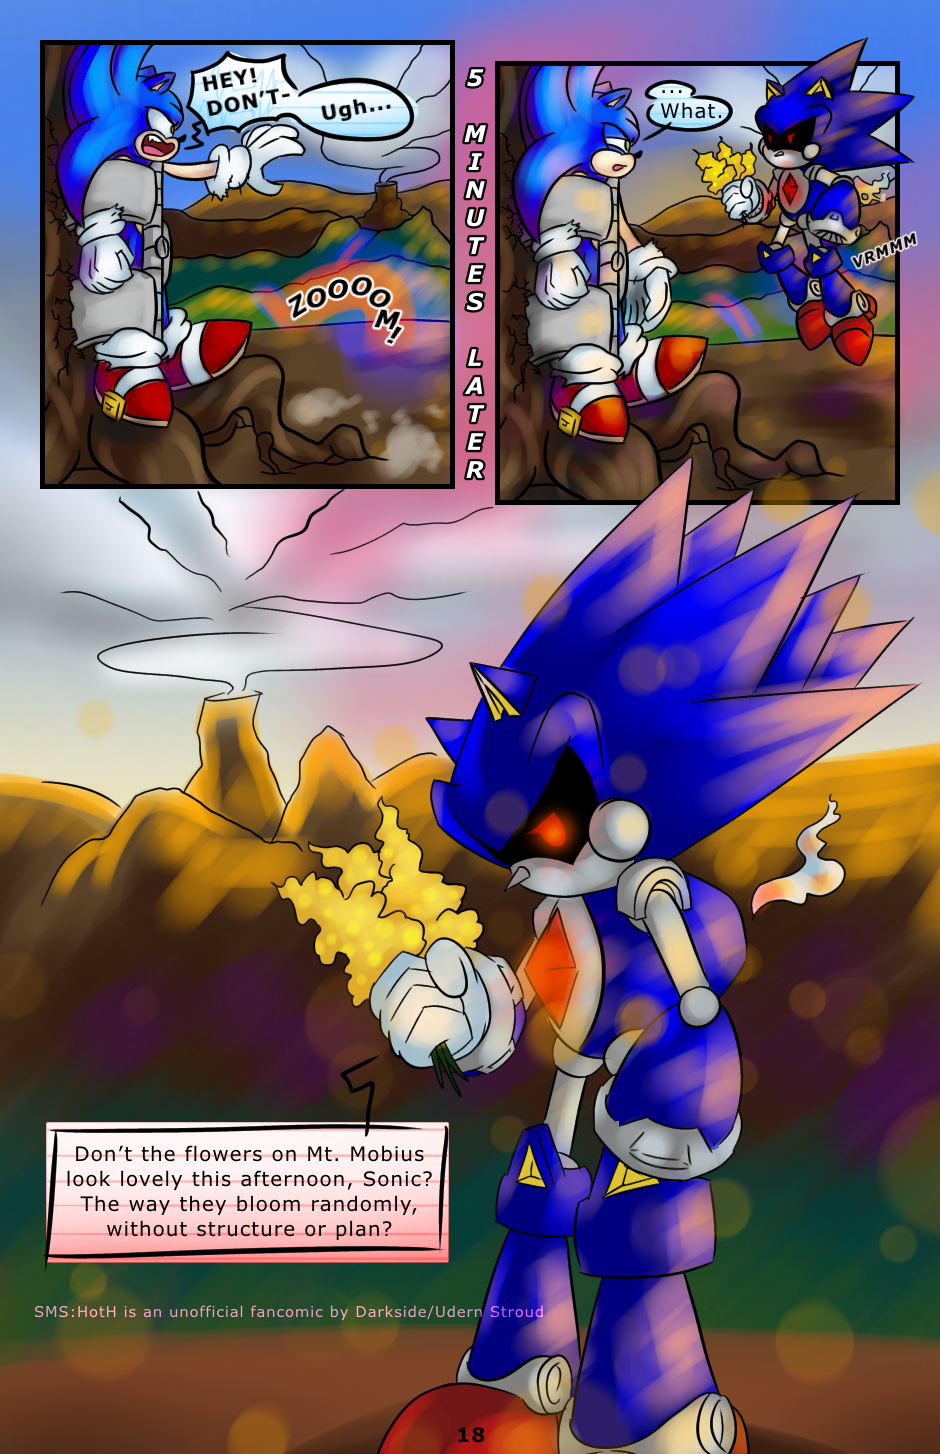 Super Sonic vs Sonic.EXE . Sonic the Hedgehog Animation . Ep2 